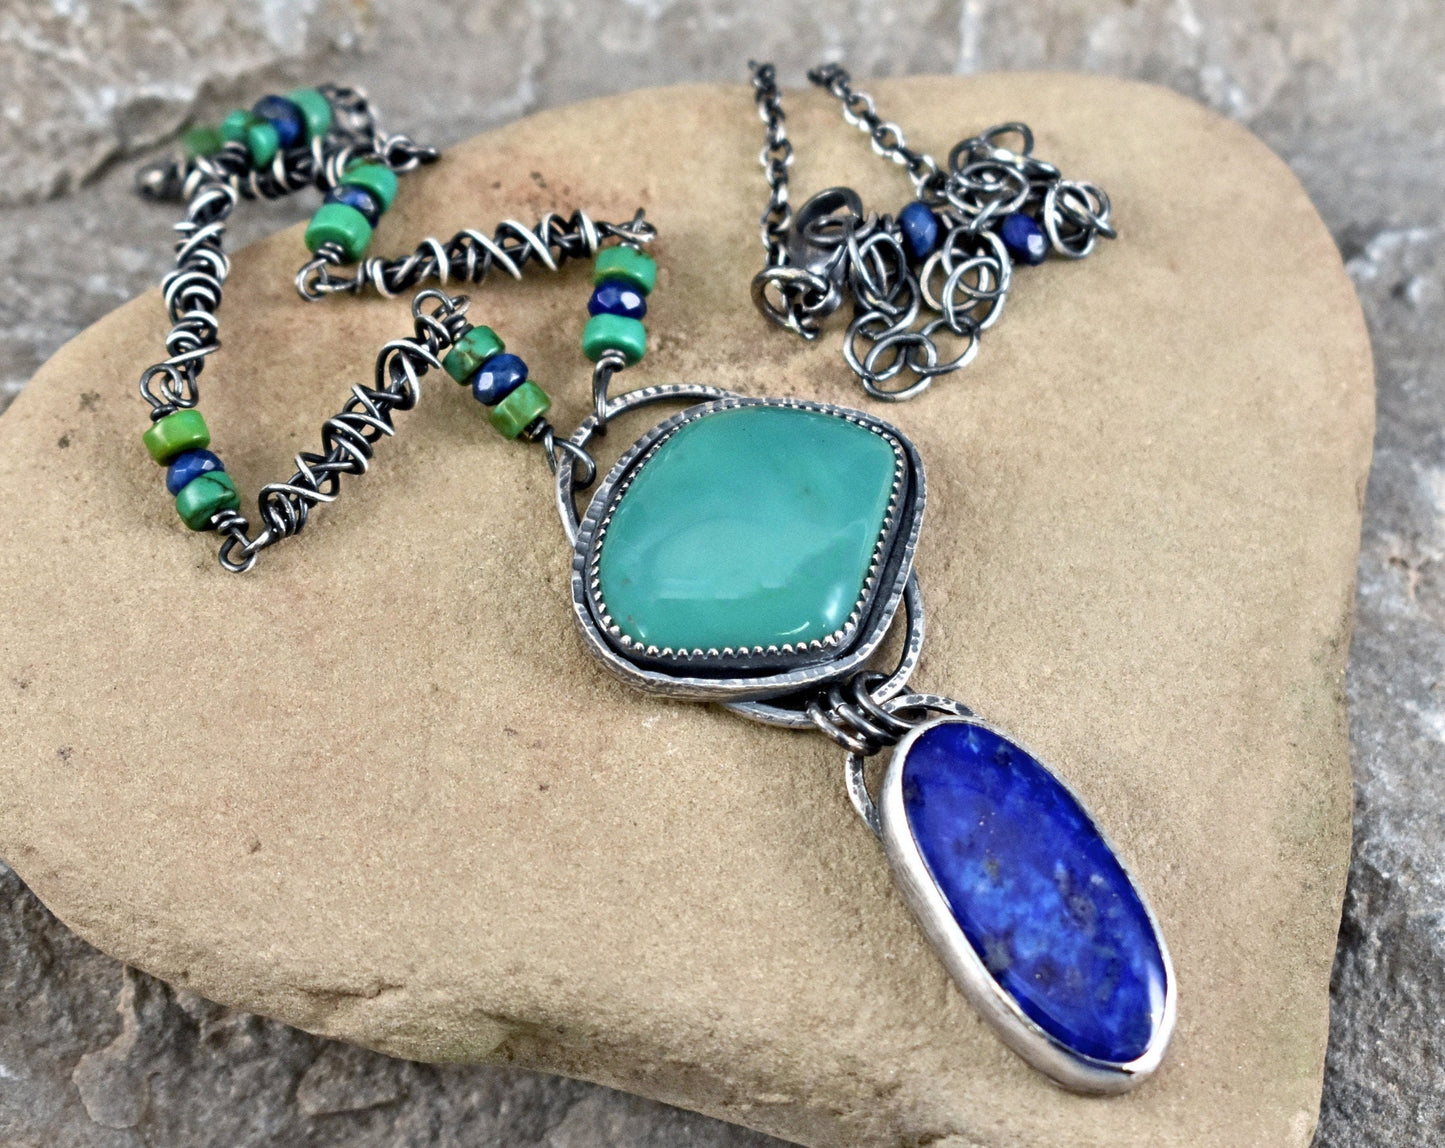 Turquoise Lapis Lazuli Necklace, Oxidized Sterling Silver Pendant, Organic Rustic Silversmith Boho Style Jewelry, Blue Green Gemstone